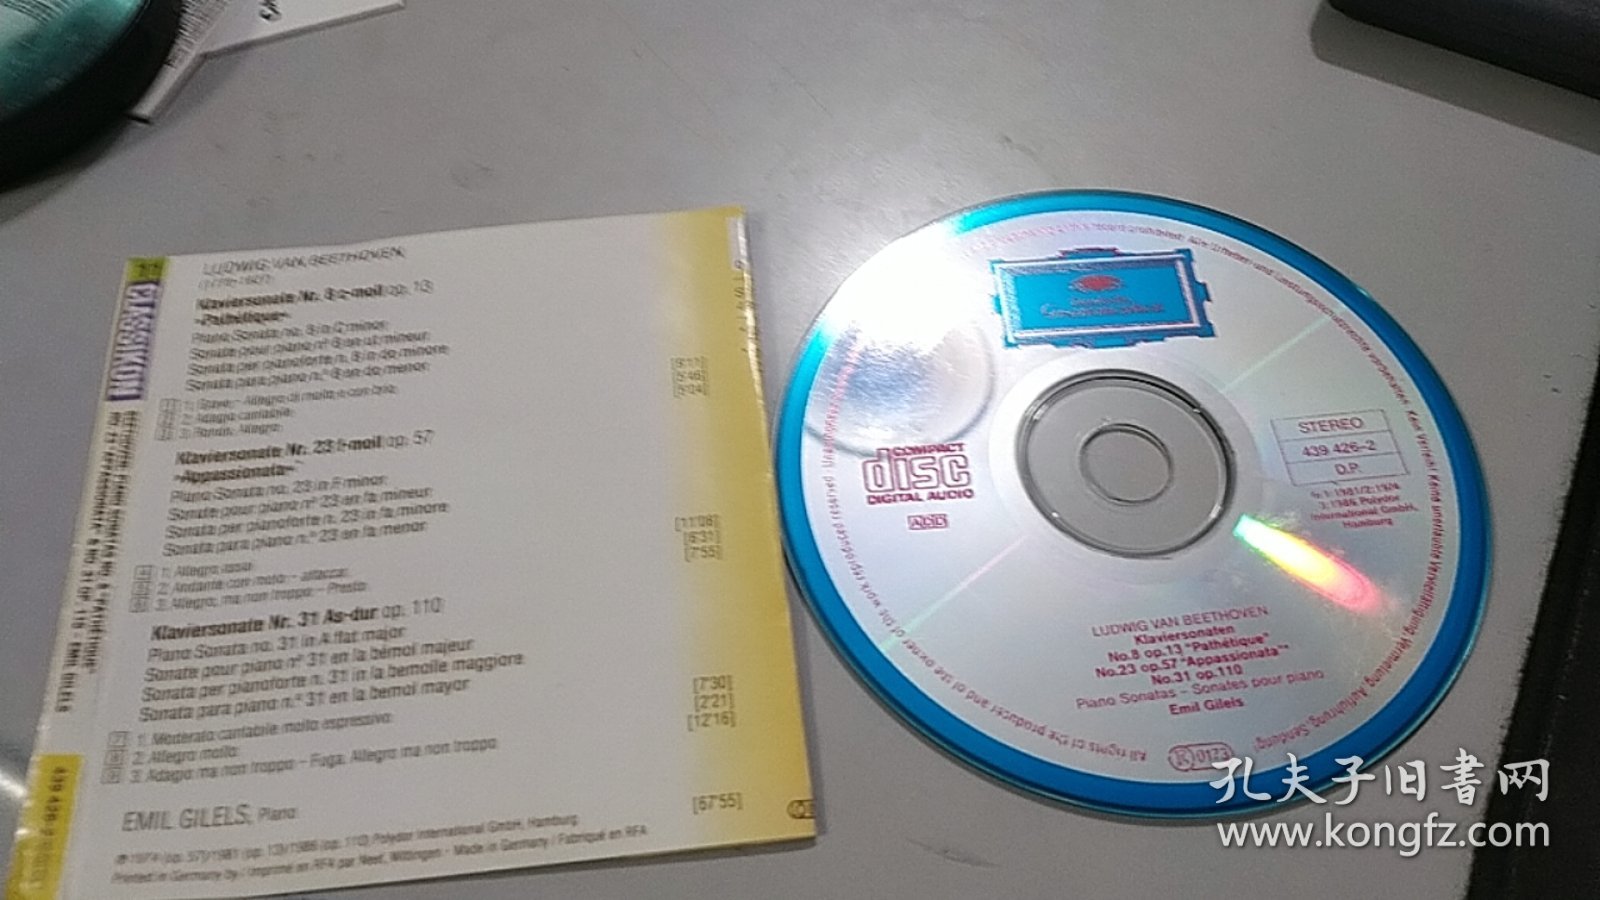 deutsche grammophon CD（1张光盘全）（外国原版，音色特别漂亮）（钢琴旋律应该为1974年，1981年，1986年录音）